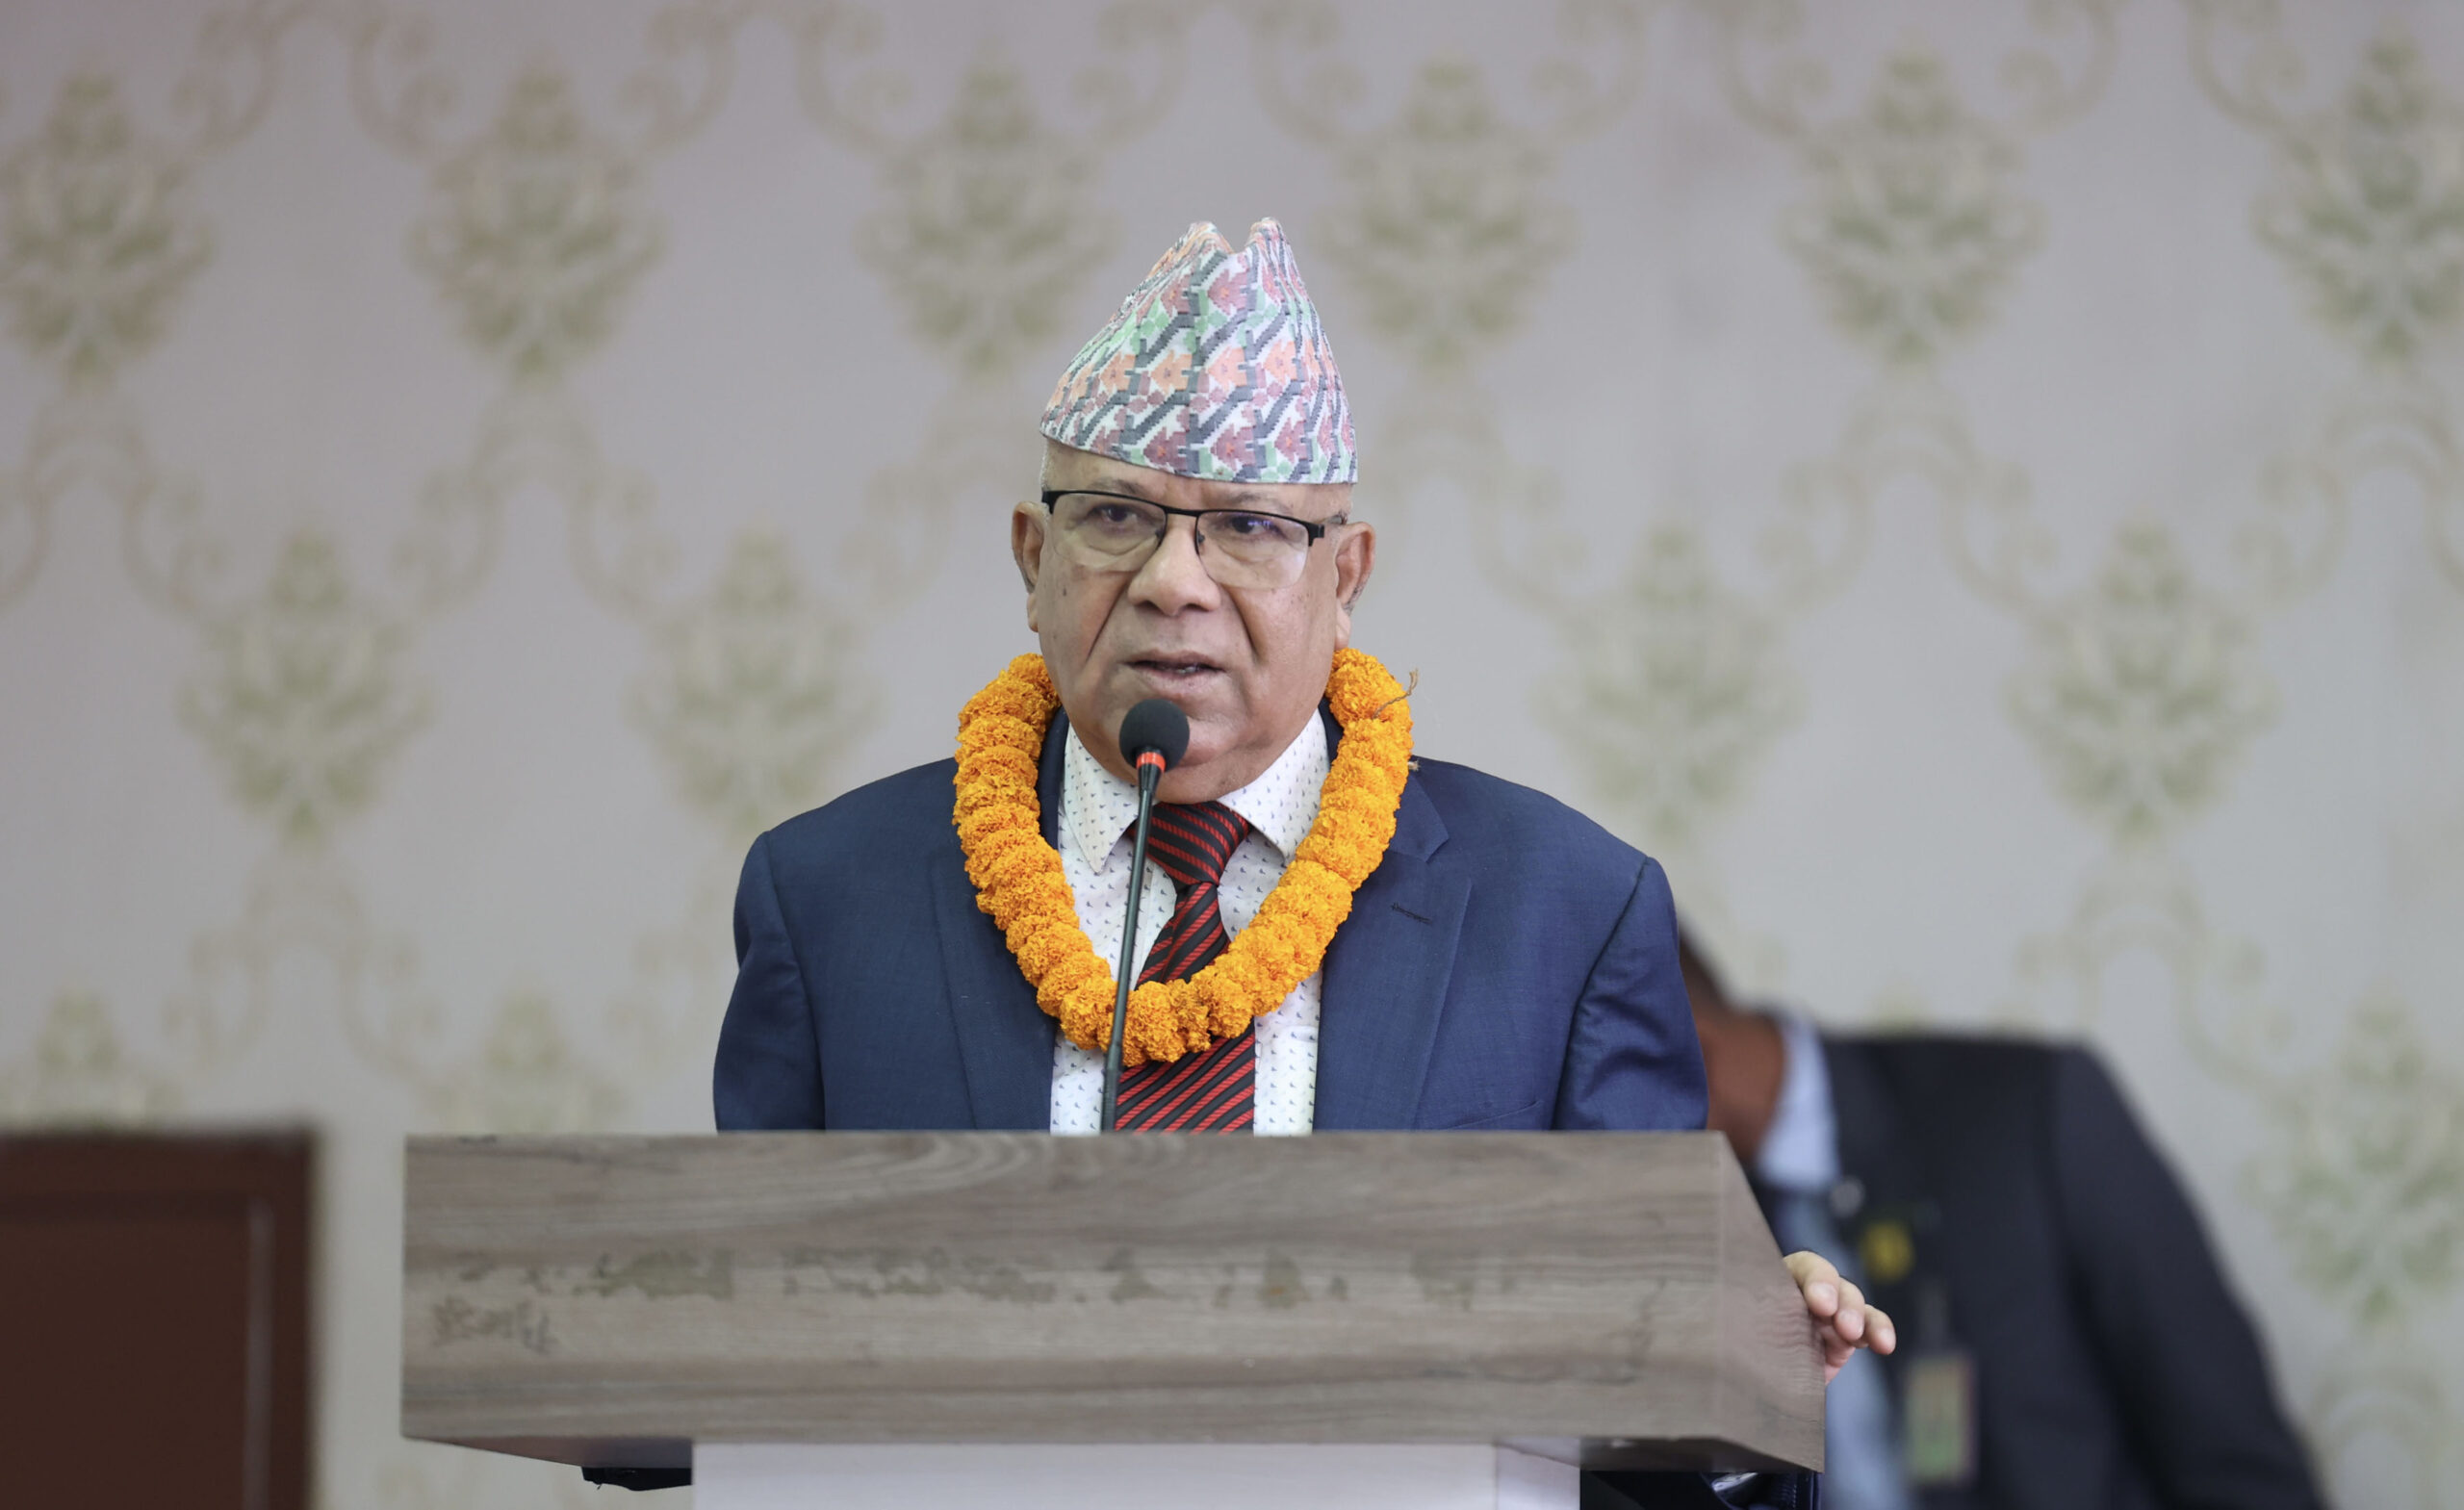 Ignoring Unified Socialist can lead to political turmoil: Chairman Nepal